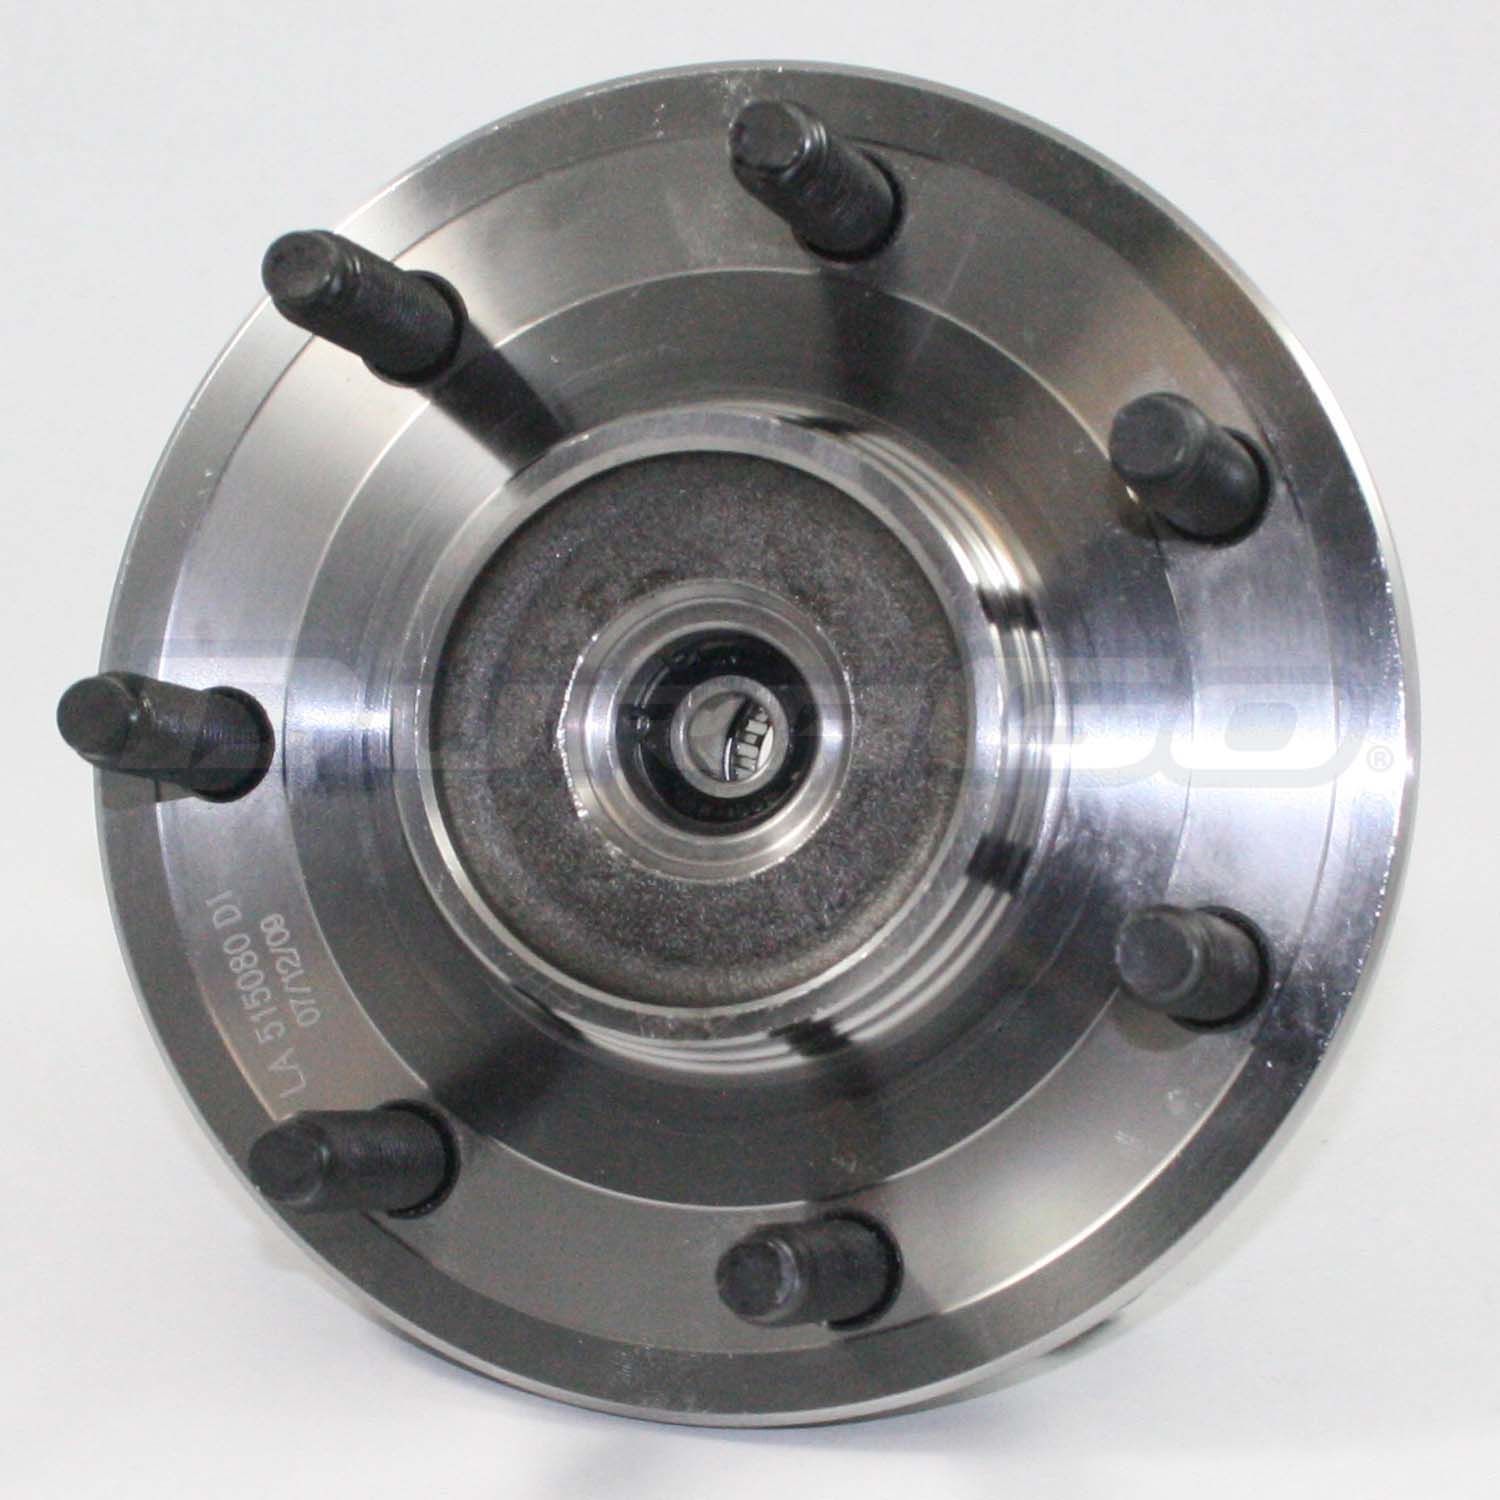 DURAGO - Wheel Bearing & Hub Assembly - D48 295-15080